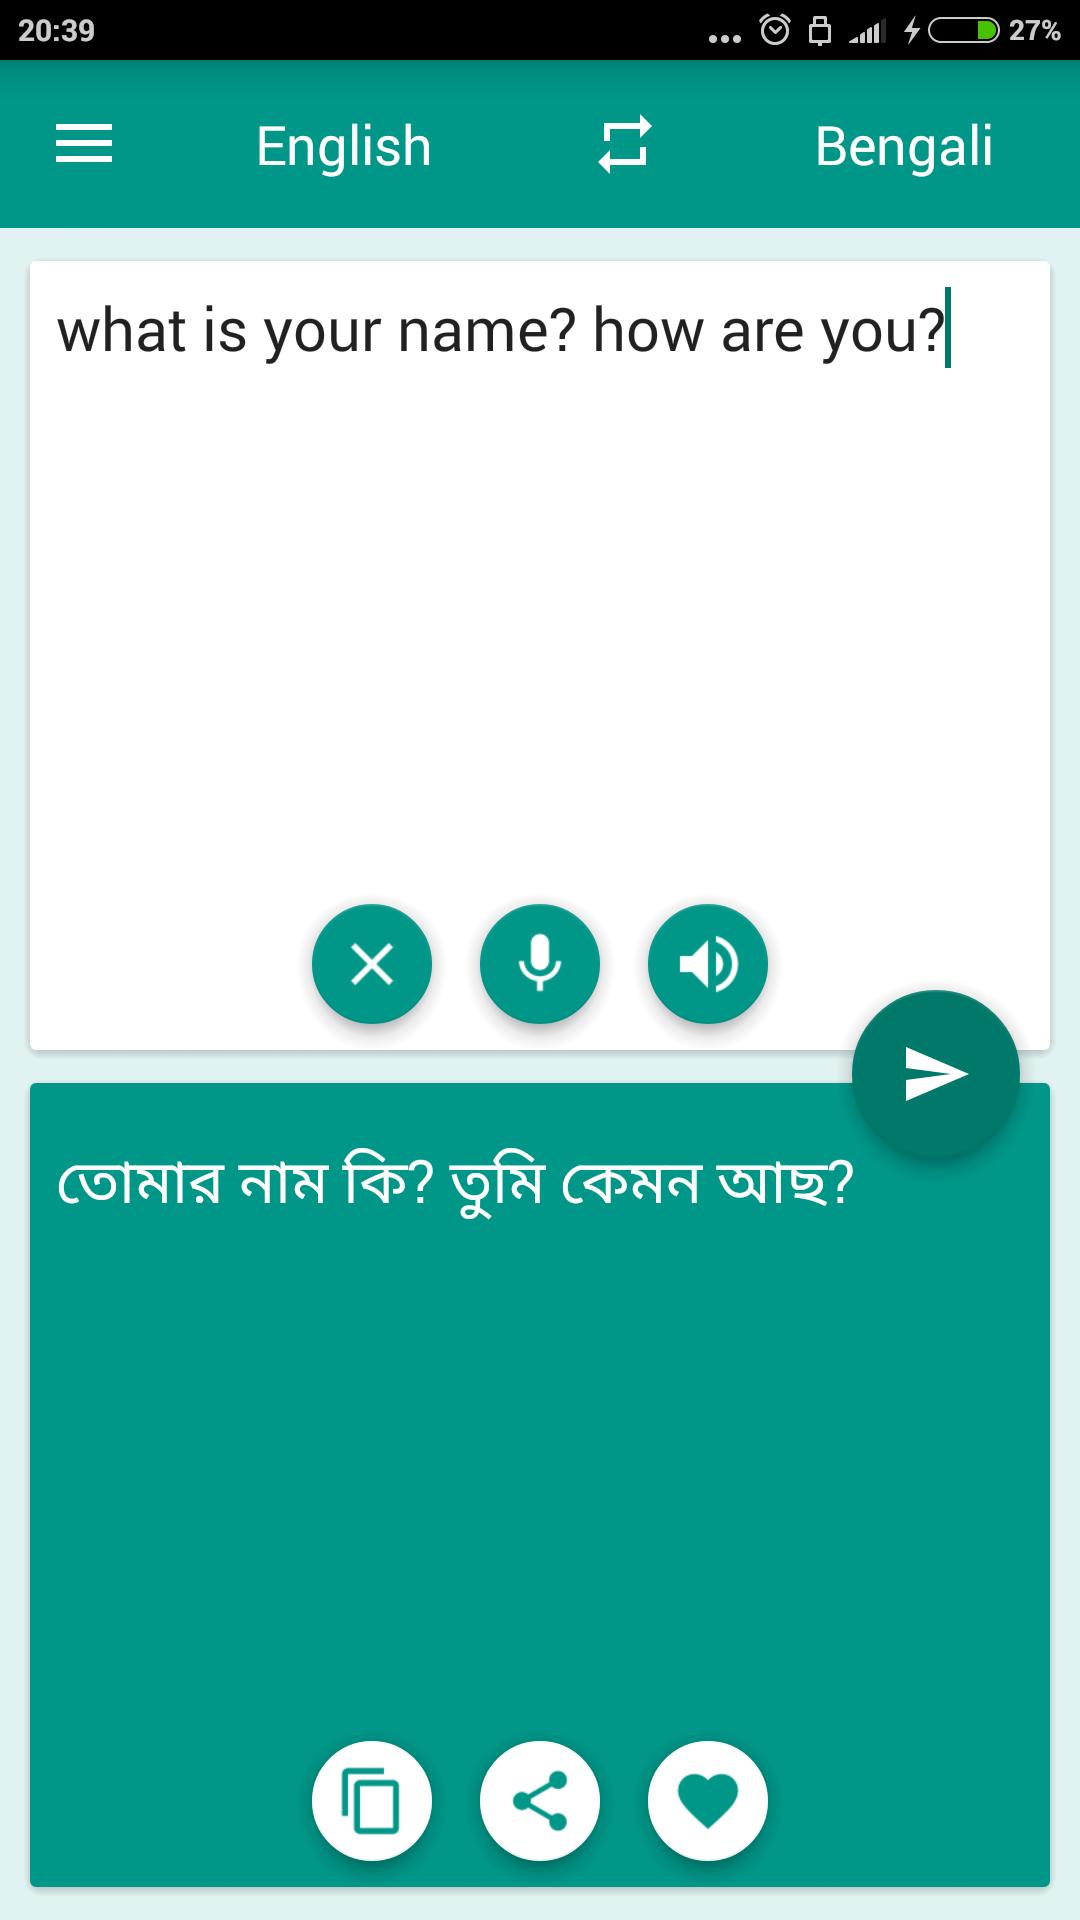 Bengali-English Translator Apk For Android Download